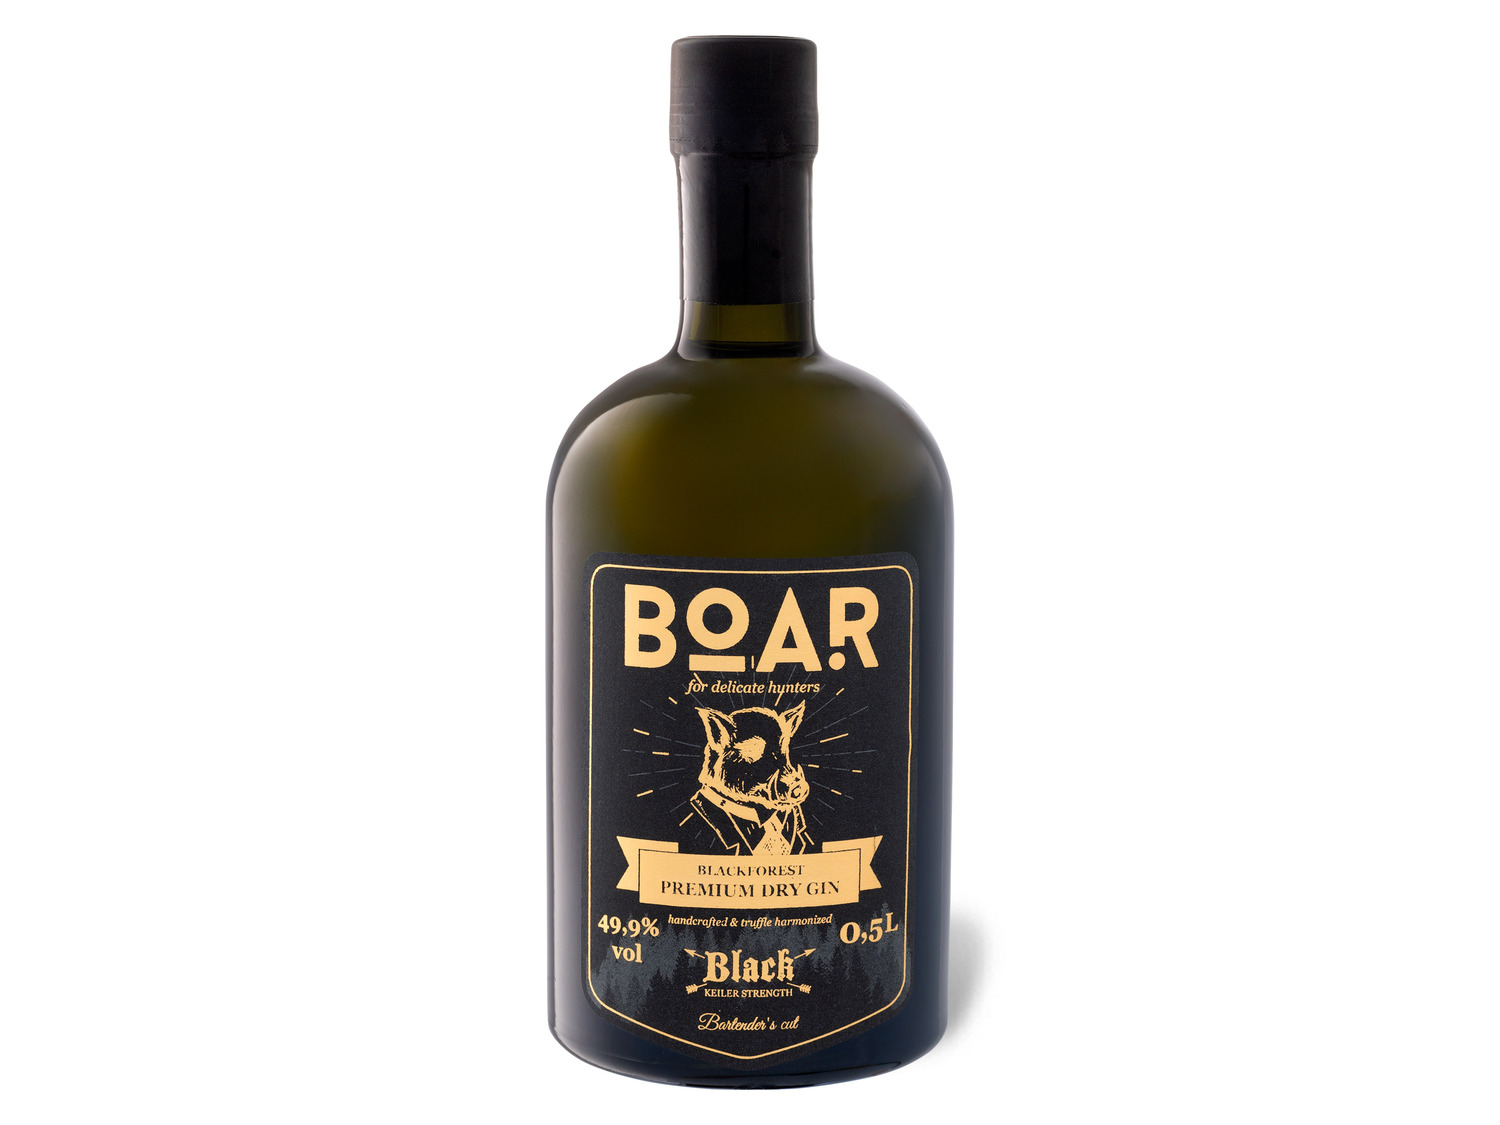 Boar Blackforest Premium Dry Gin Black Edition 49,9% V…